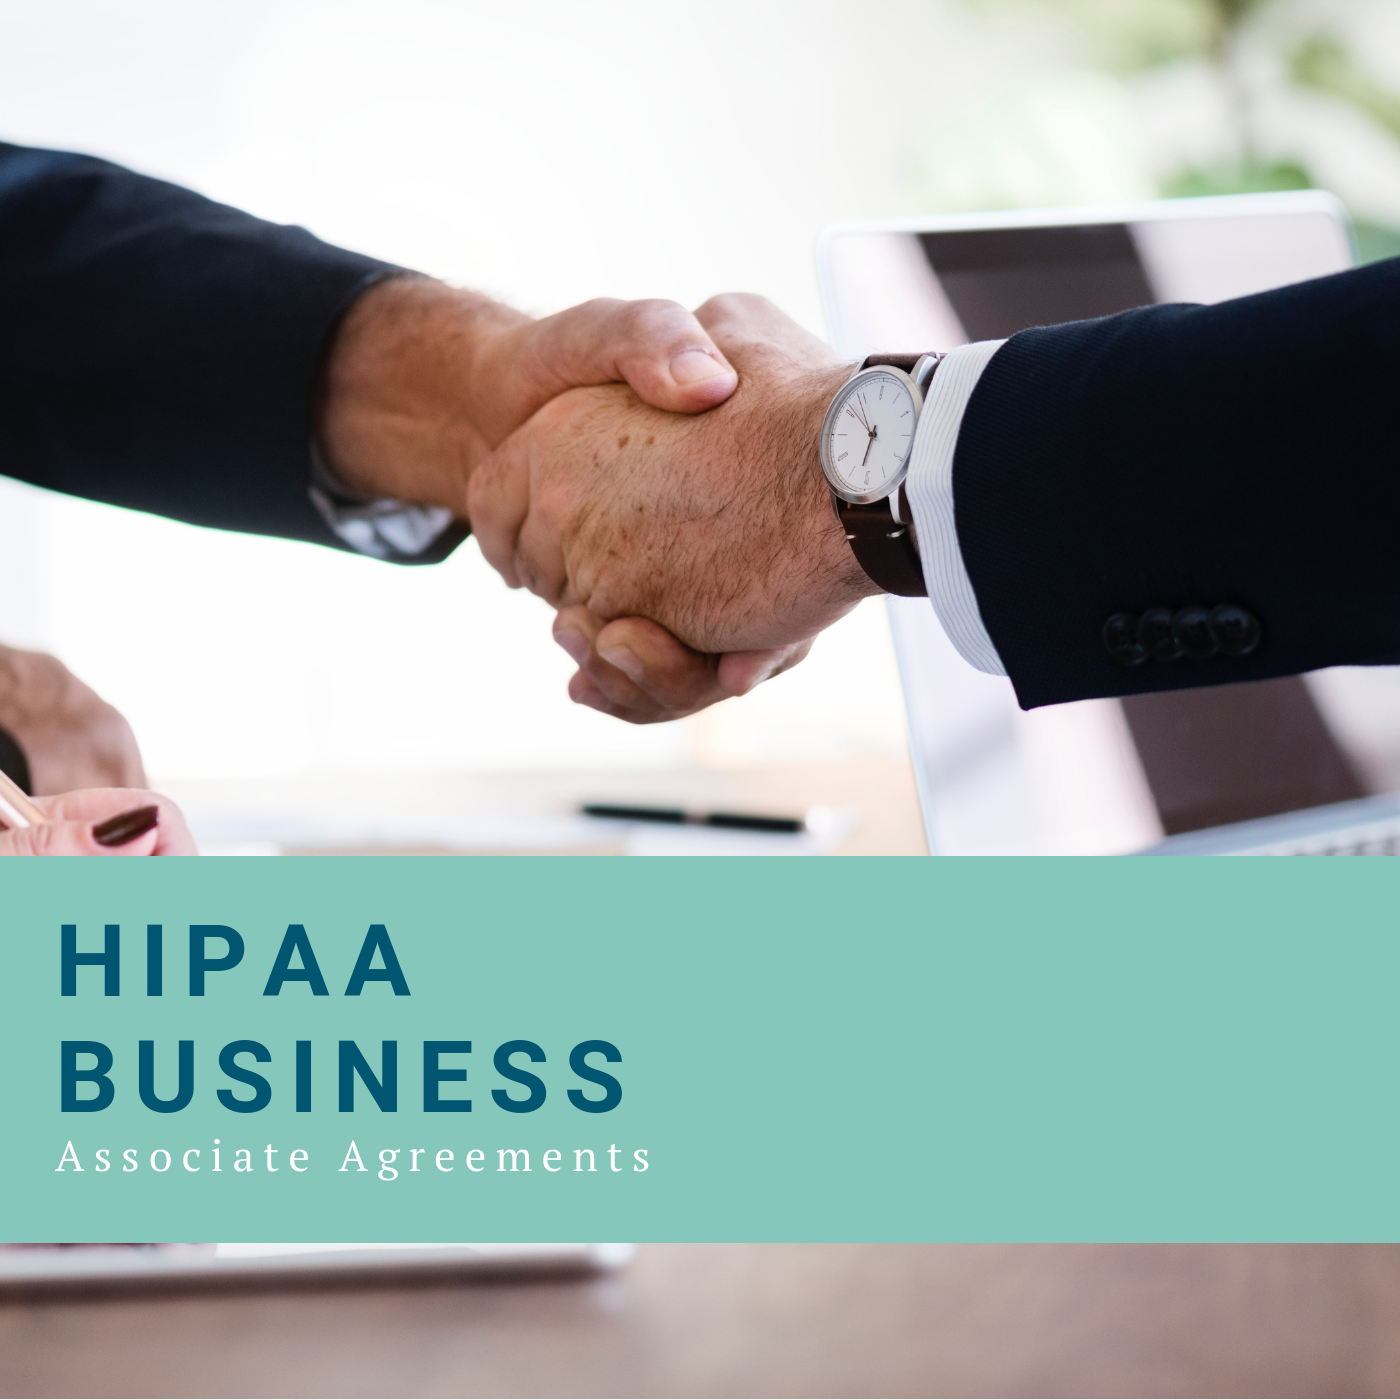 HIPAA Business Associate Agreements Image